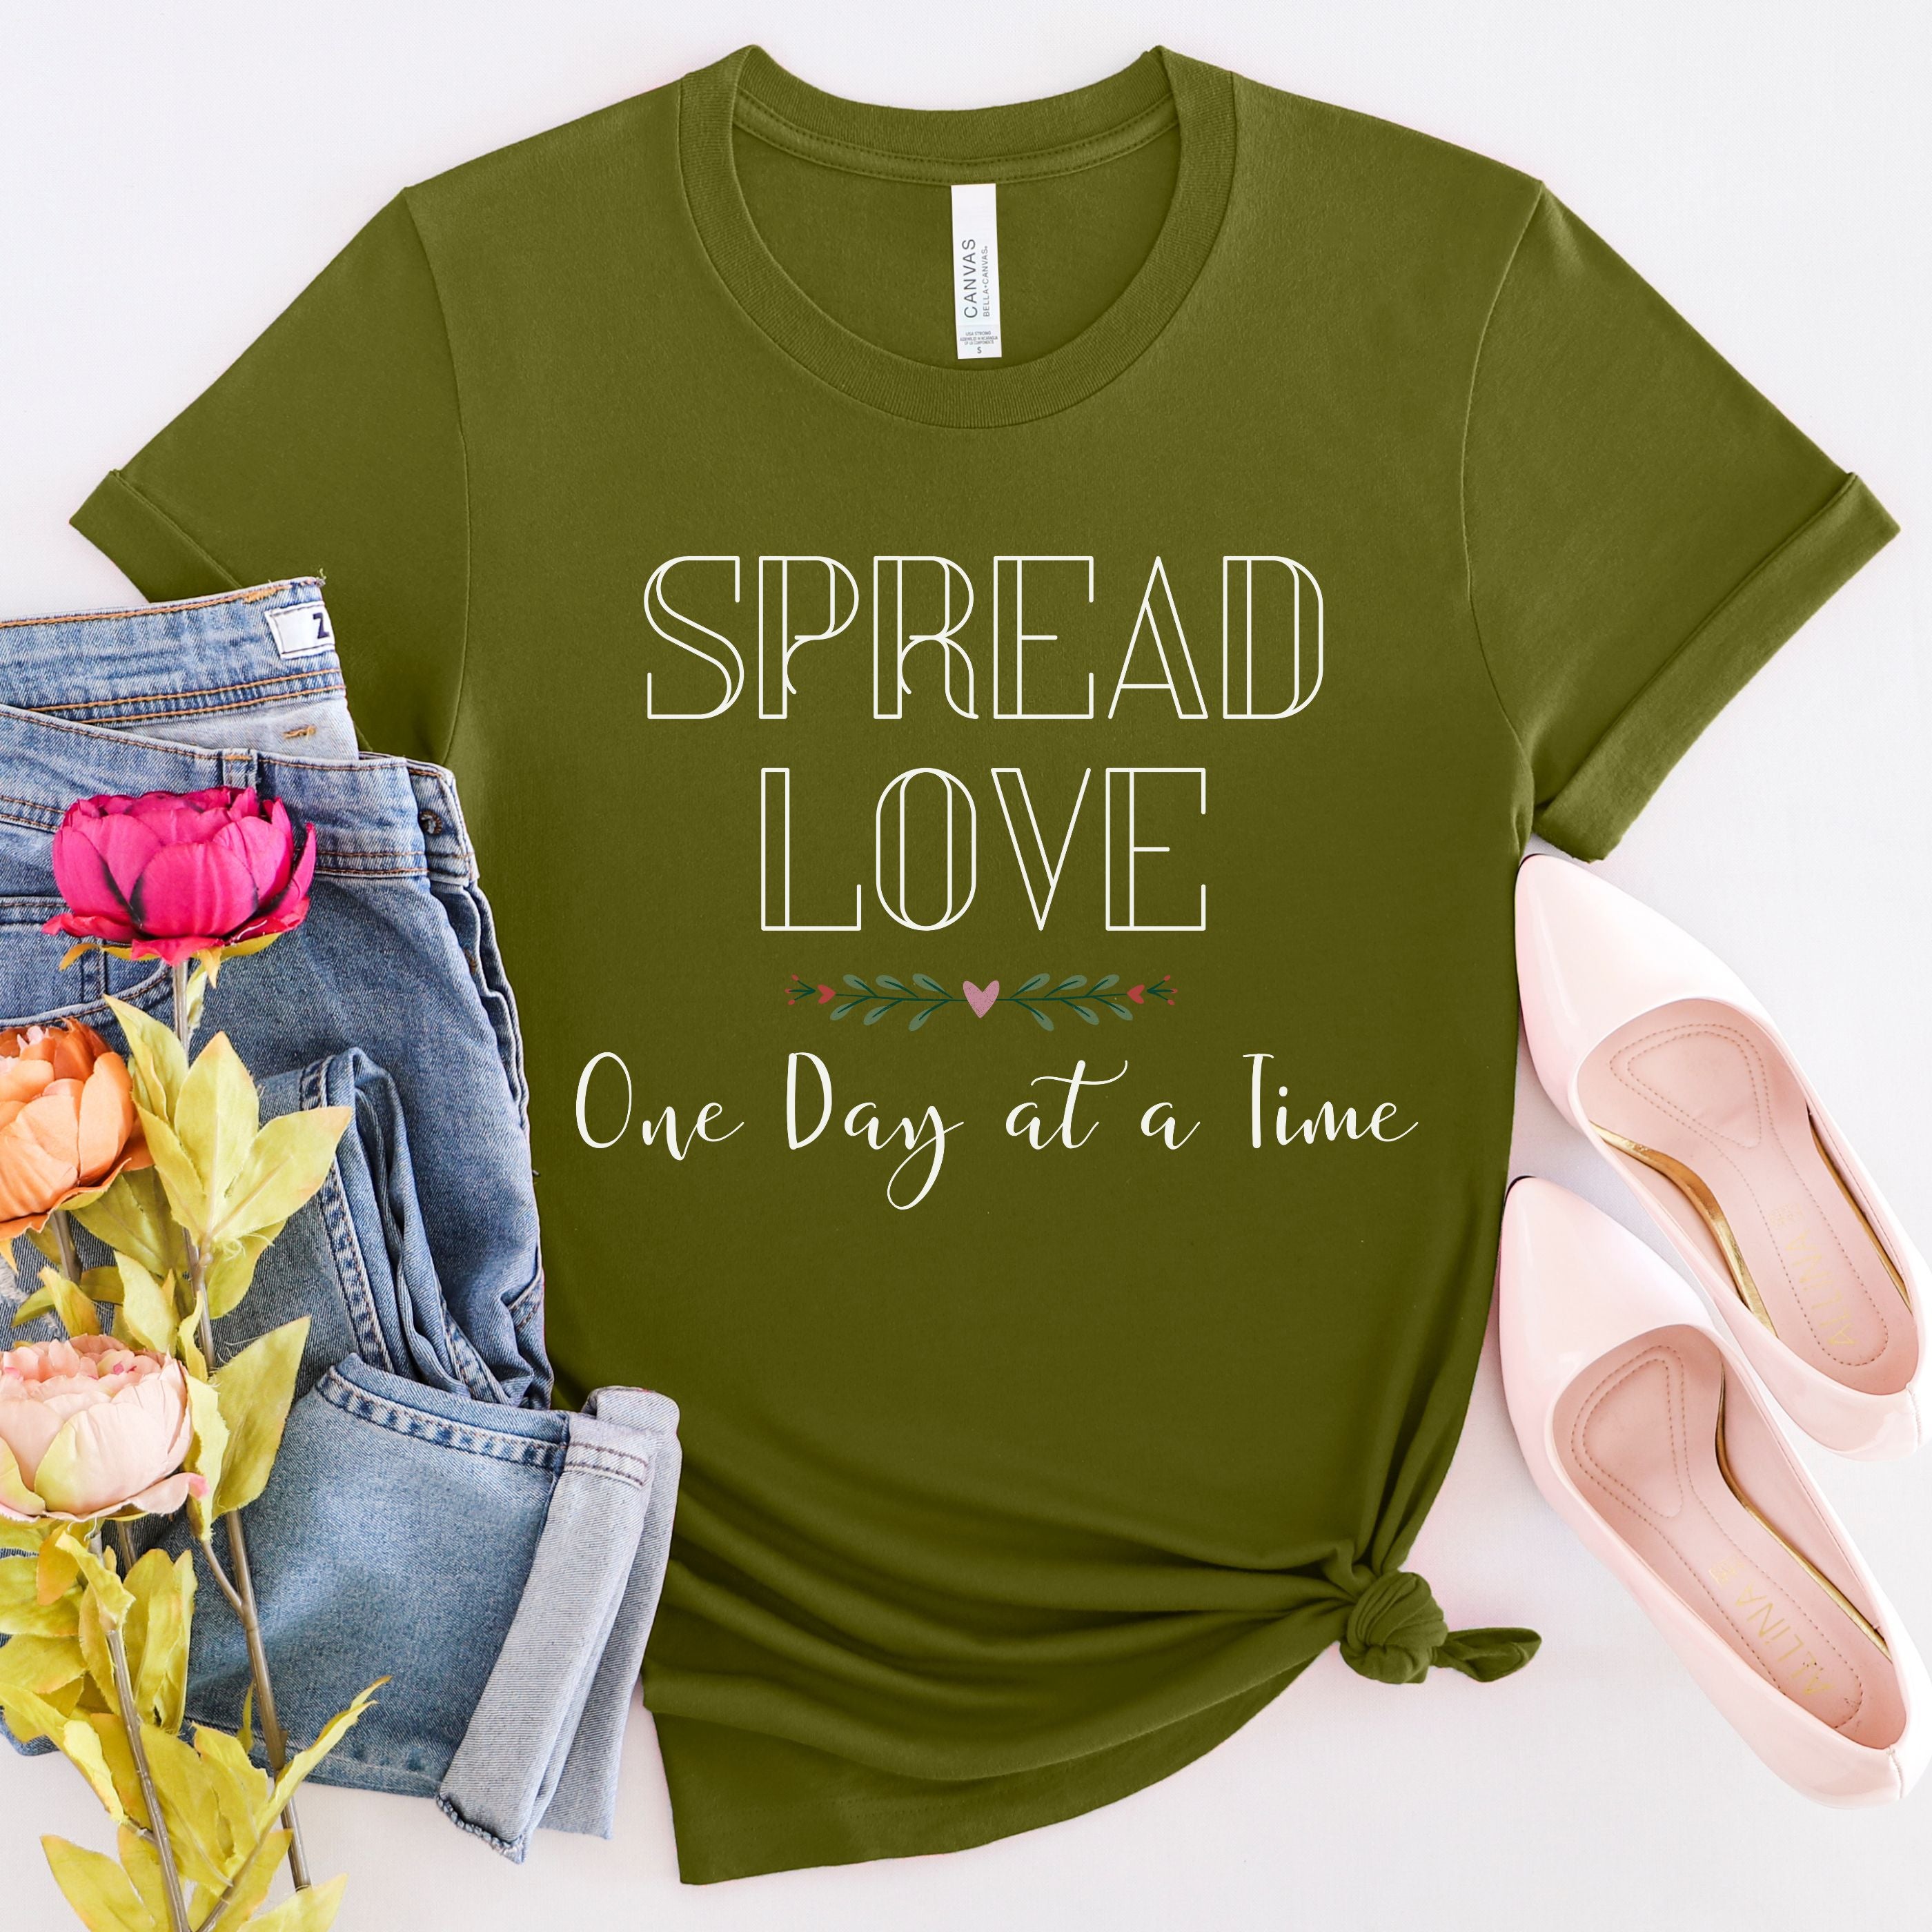 Spread Love T-shirt